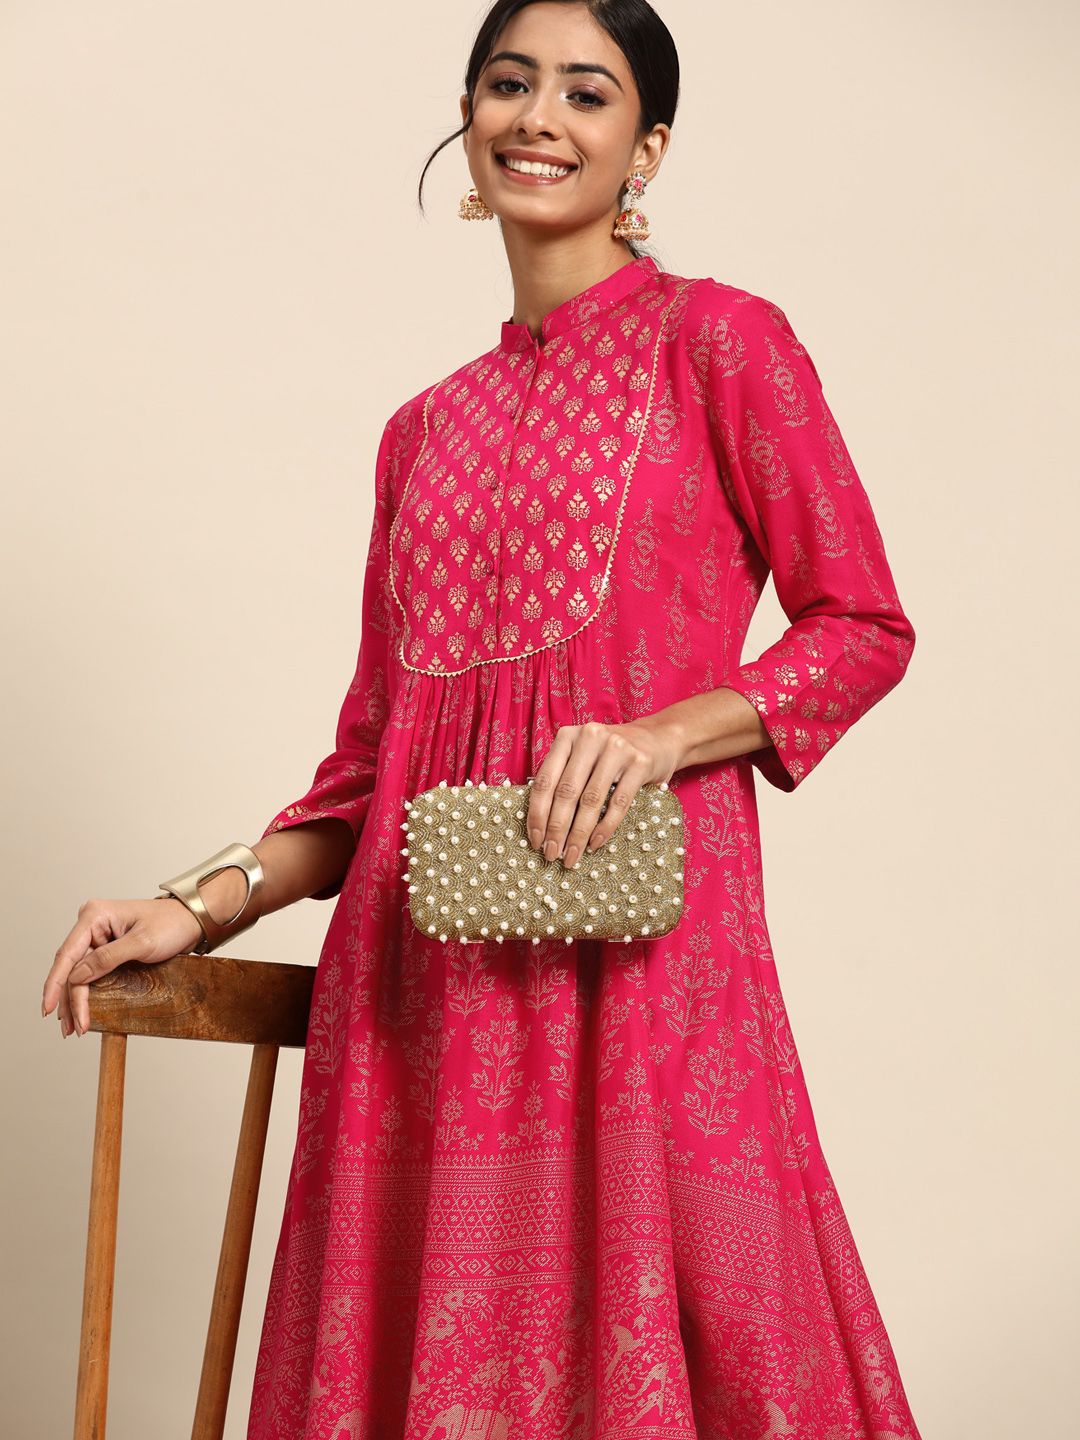 Sangria Fuchsia Pink & Golden Ethnic Motifs Ethnic A-Line Midi Dress Price in India